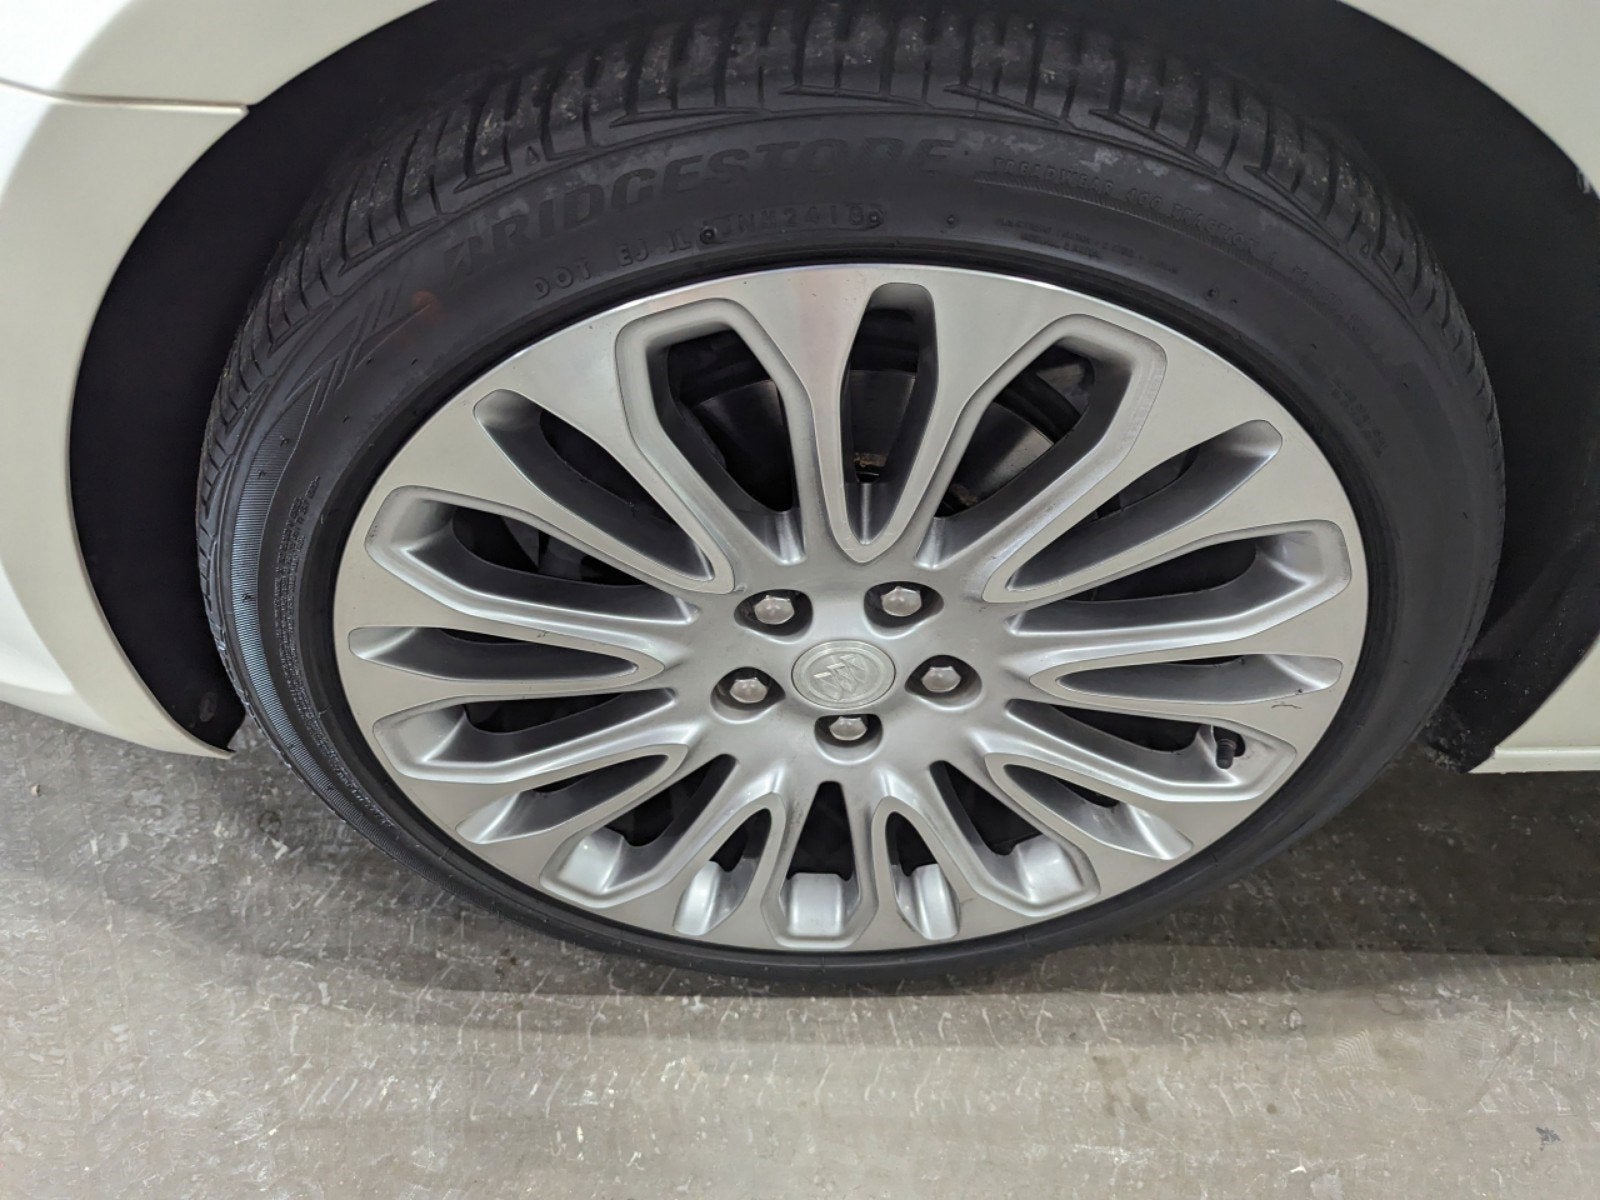 2014 Buick LaCrosse Premium II Front Wheel Drive Premium Leather Heated/Cooled Preferred Equipment Pkg Nav Sunroof